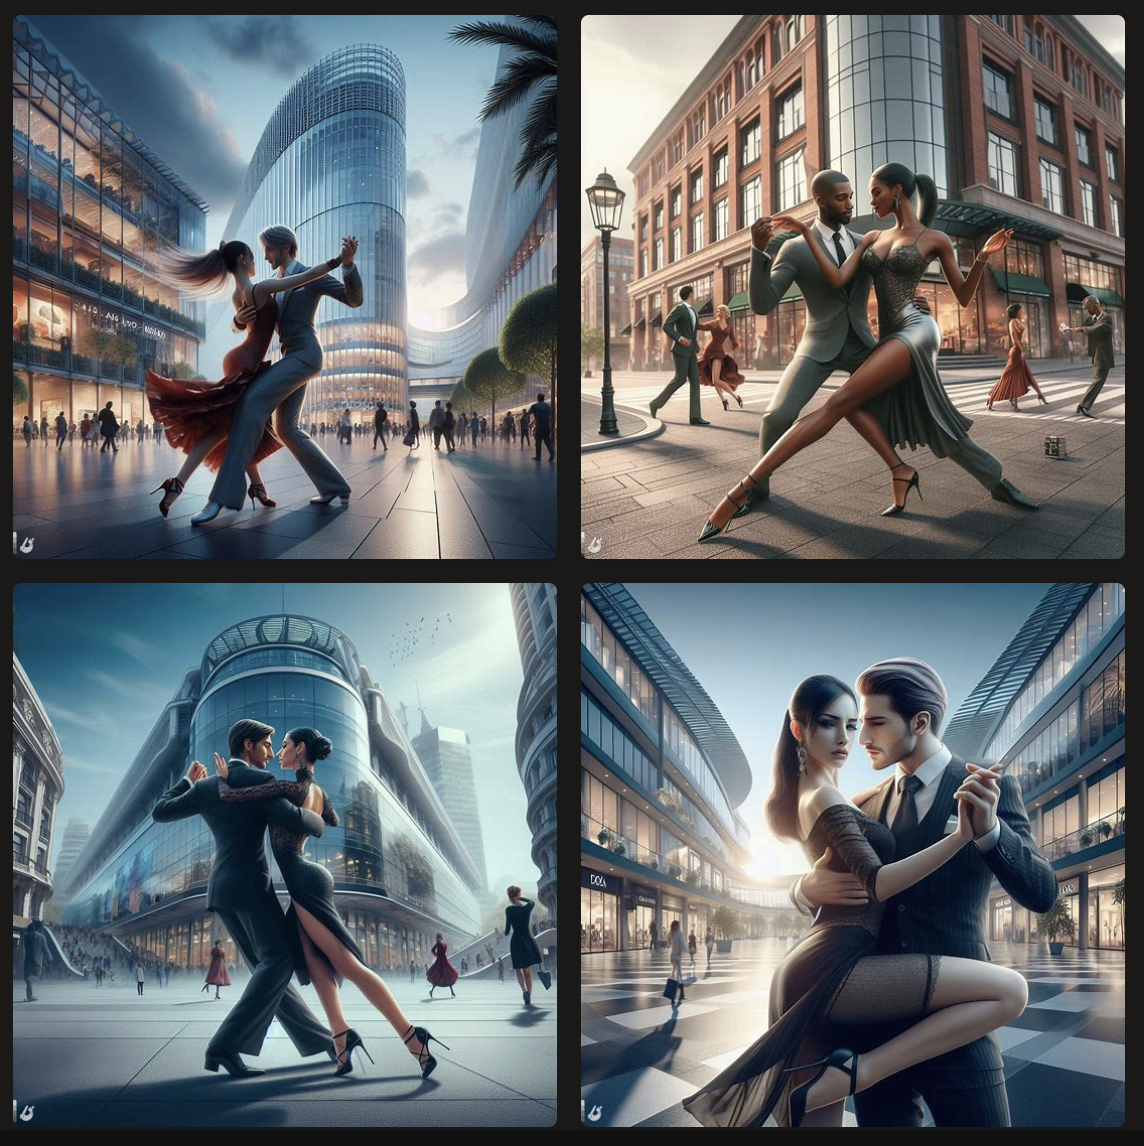 Generating tango images (part 2)